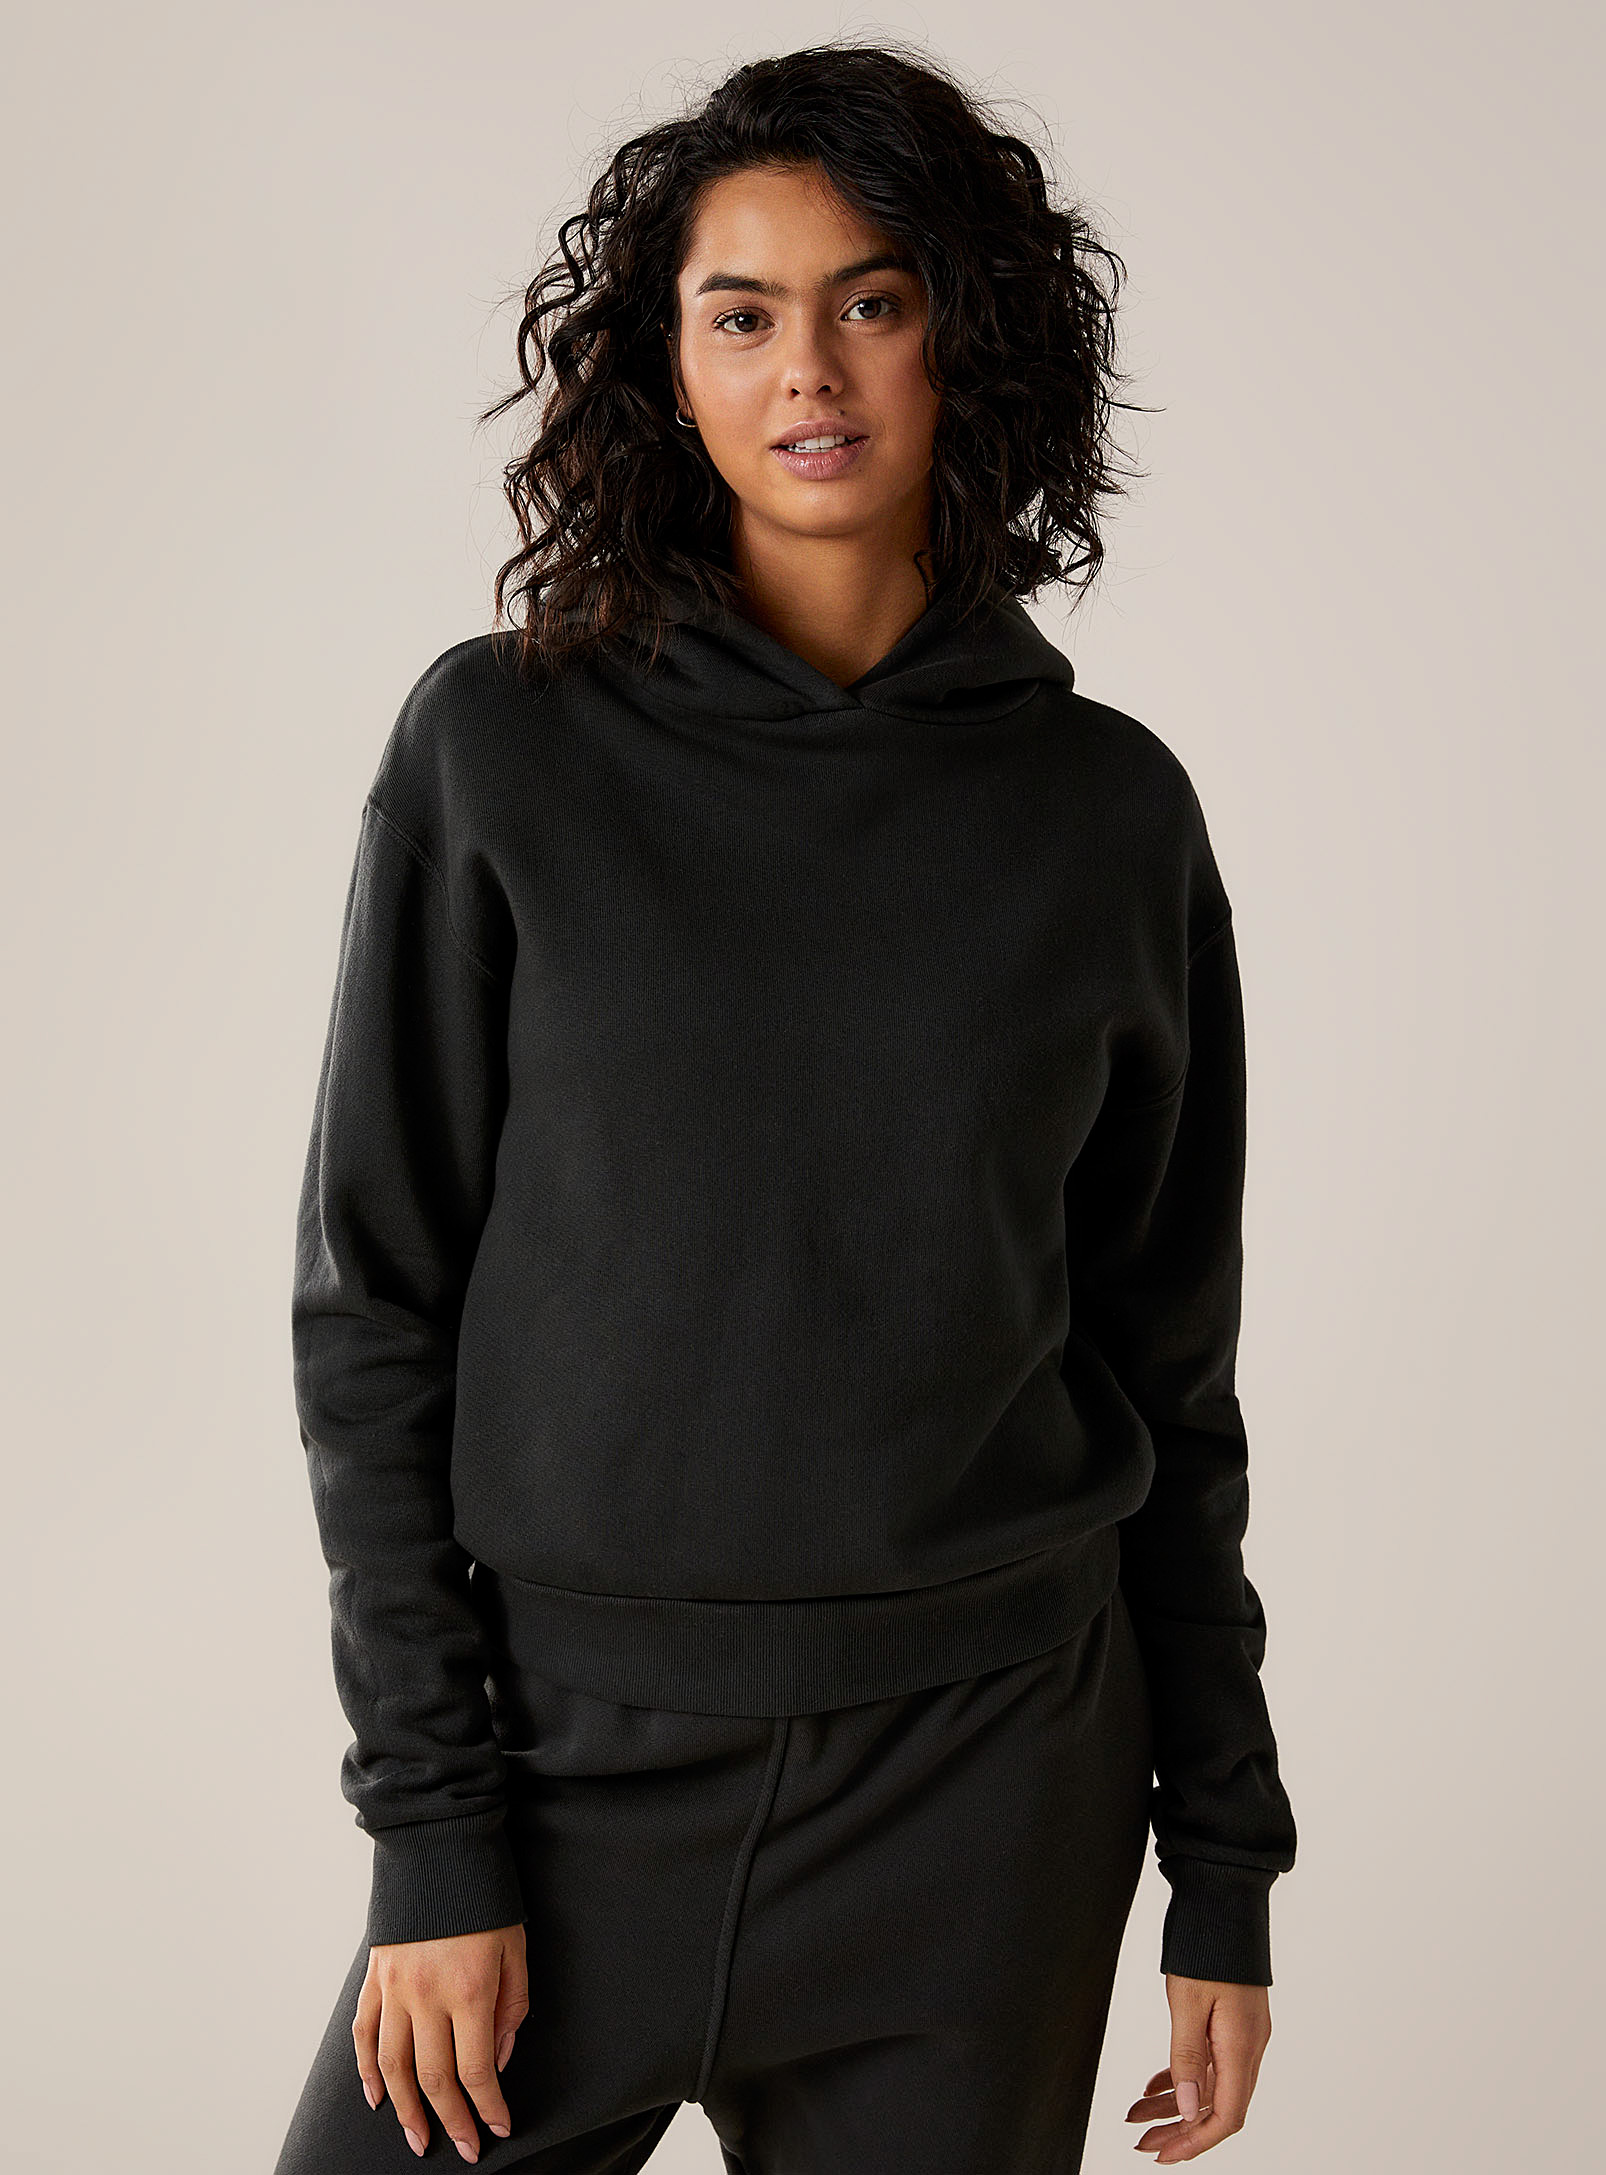 Shirt - Women's Heart black hooded lounge sweatshirt